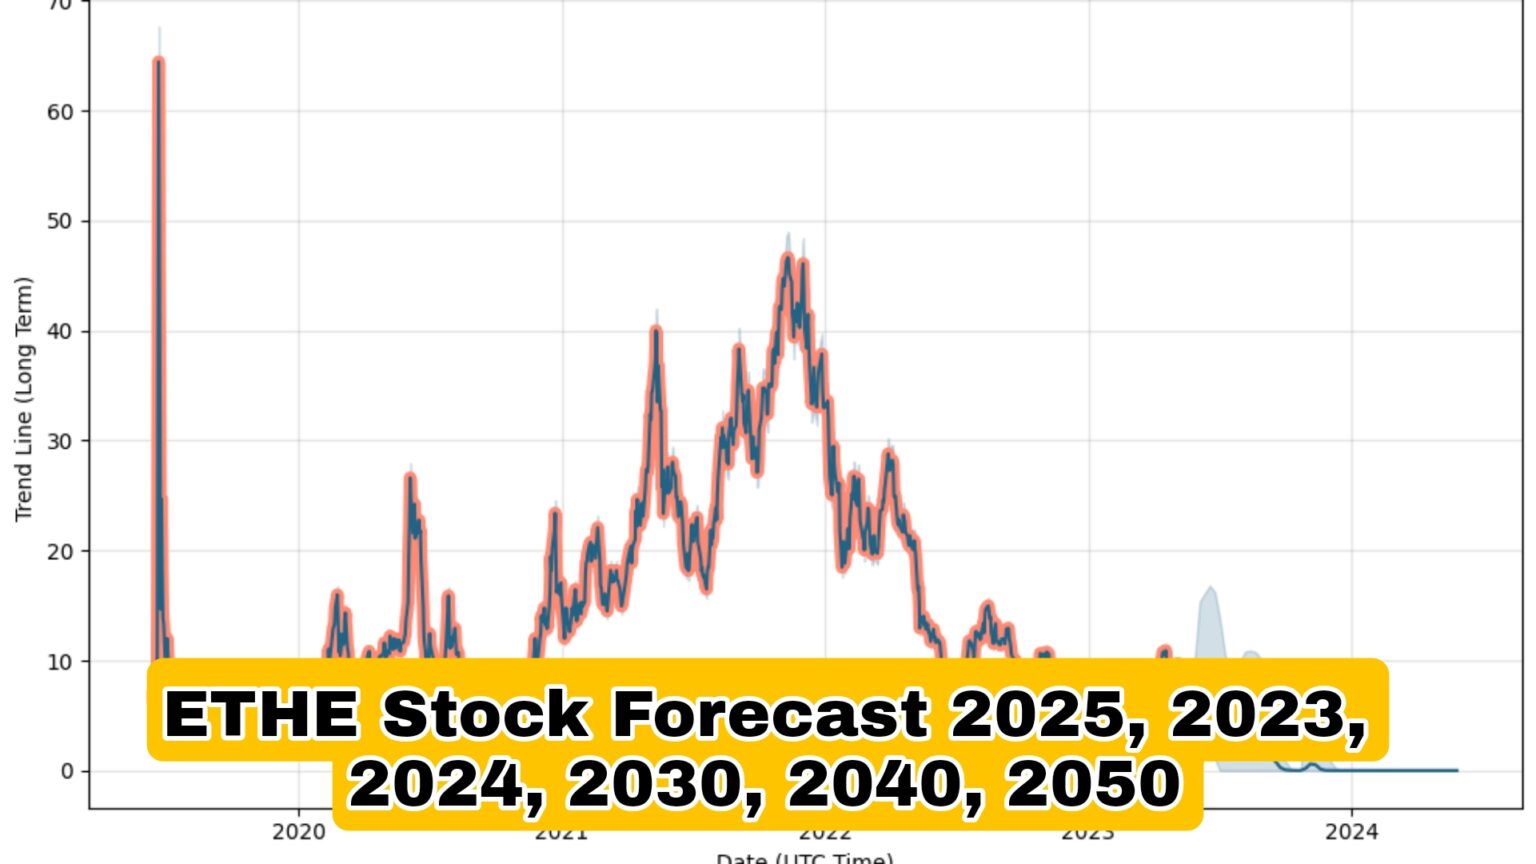 ETHE Stock Forecast 2025, 2023, 2024, 2030, 2040, 2050